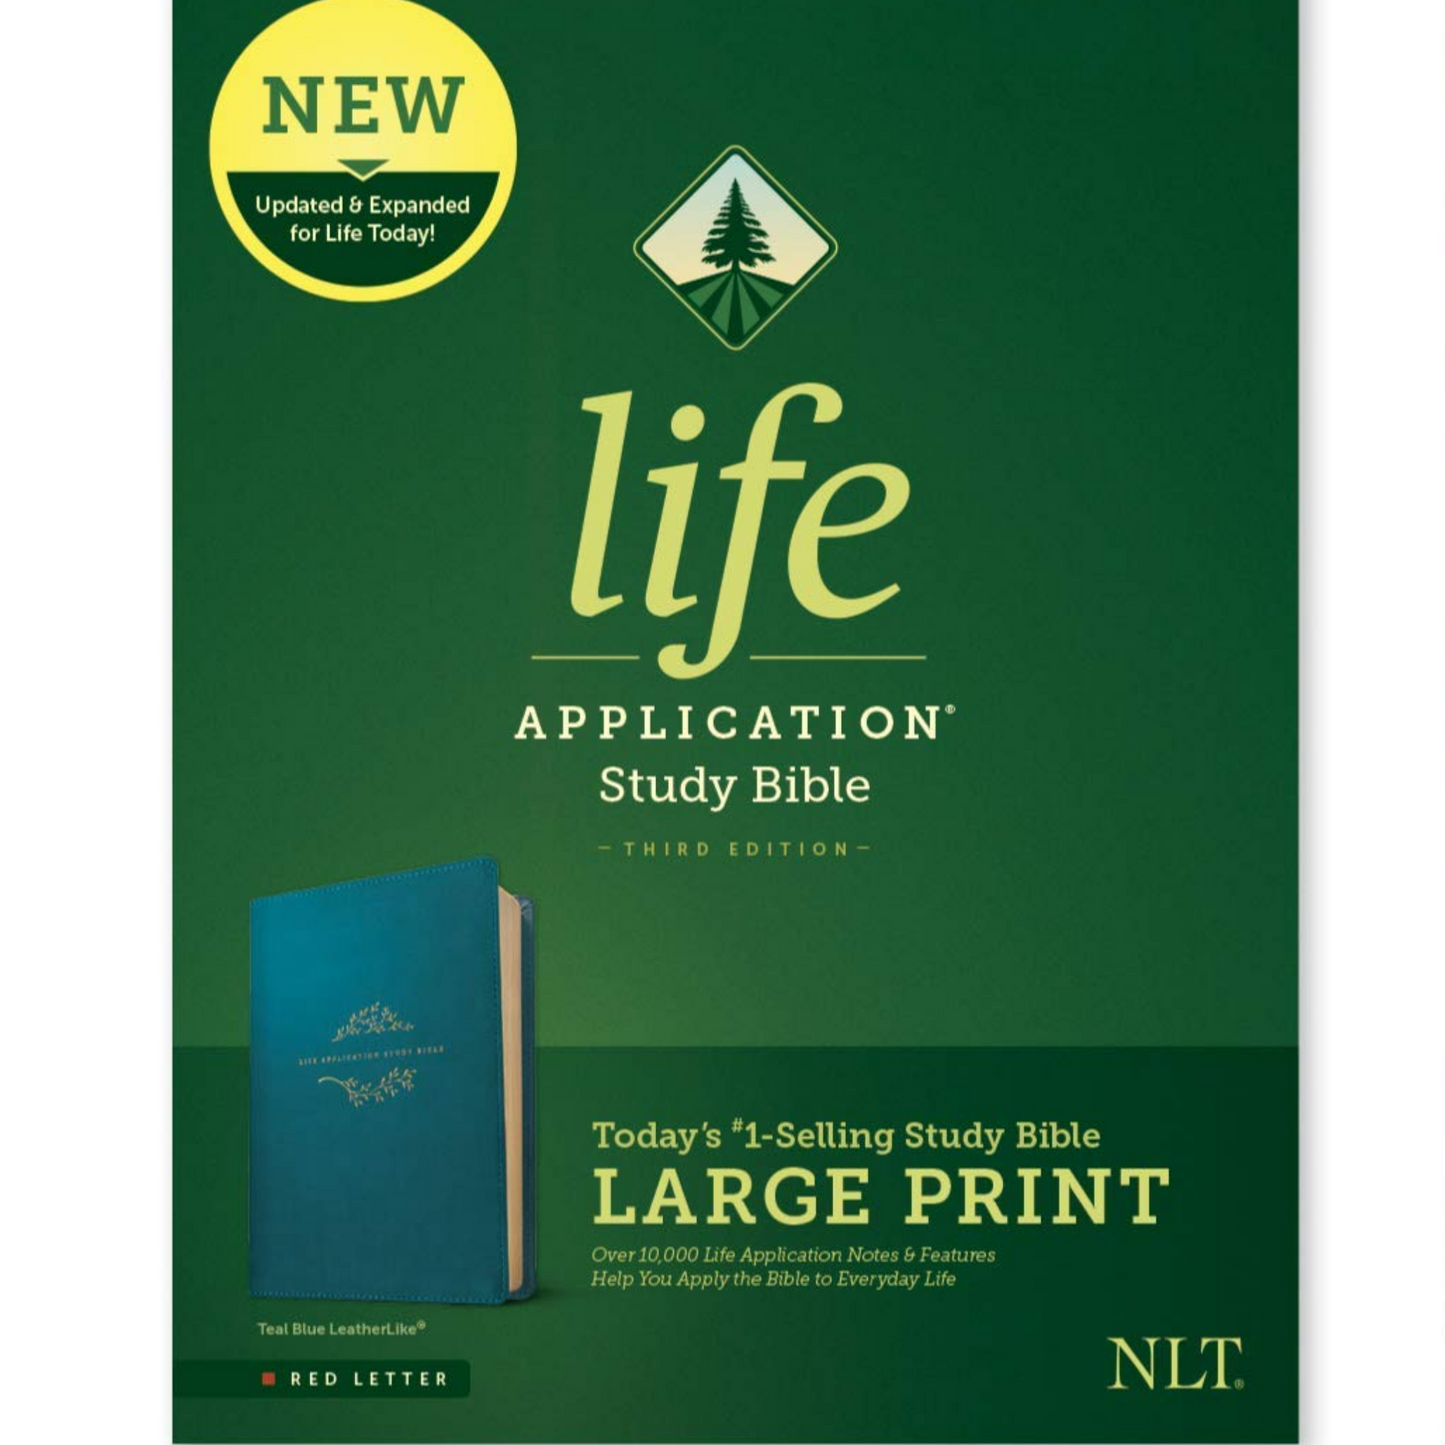 NLT Life Application Study Bible (Third Ed), Large Print - LeatherLike, Teal Blue